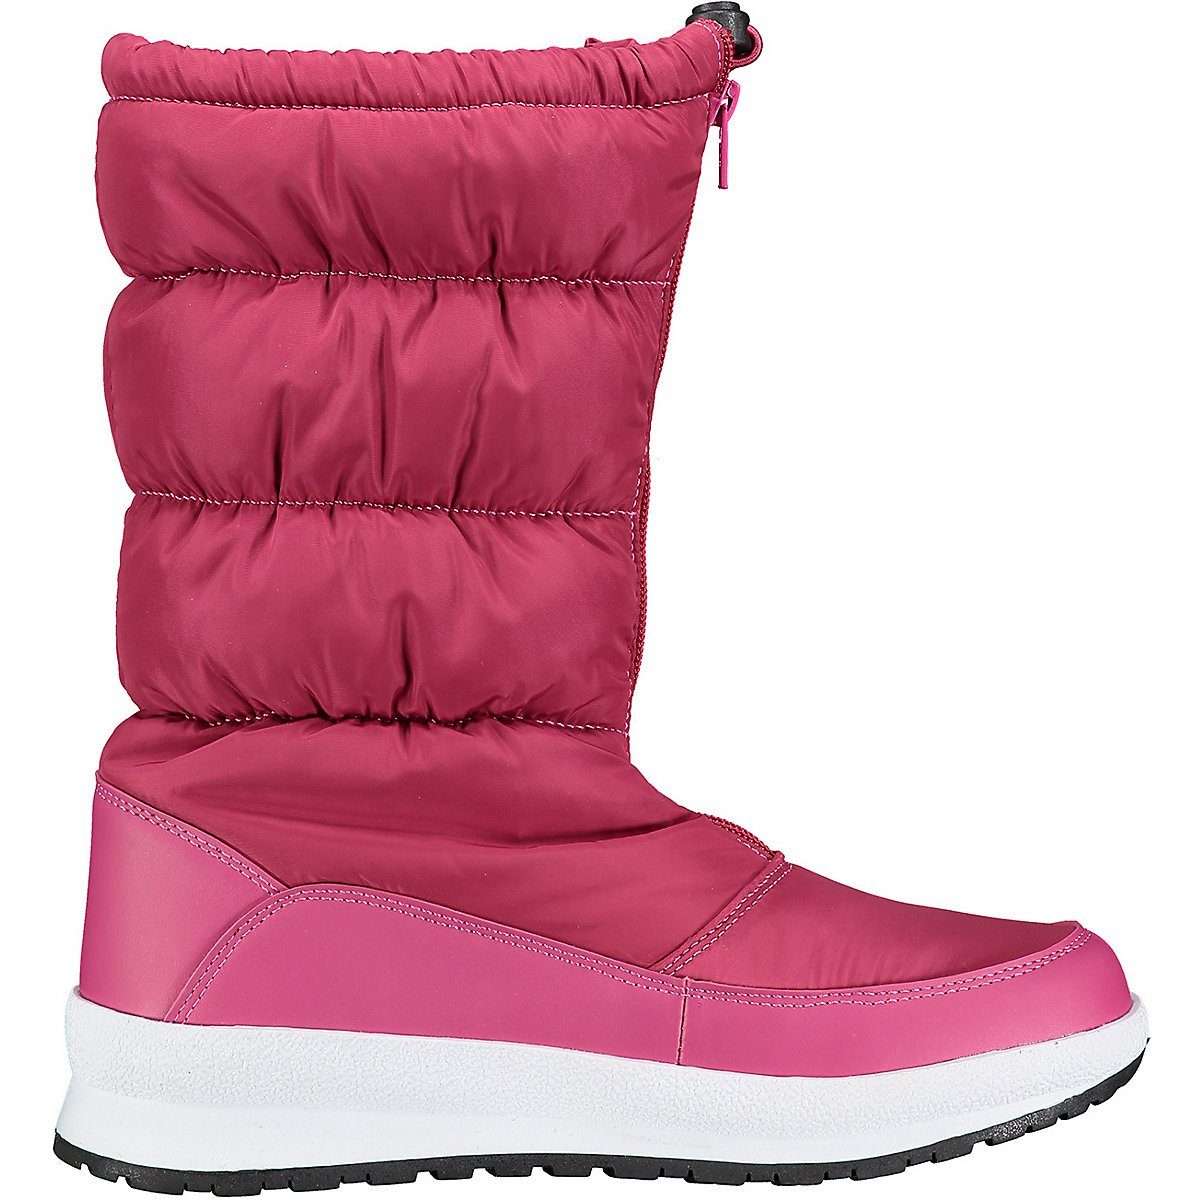 Schuhe Boots CMP HOTY WMN SNOW BOOT Winterstiefel Winterstiefel